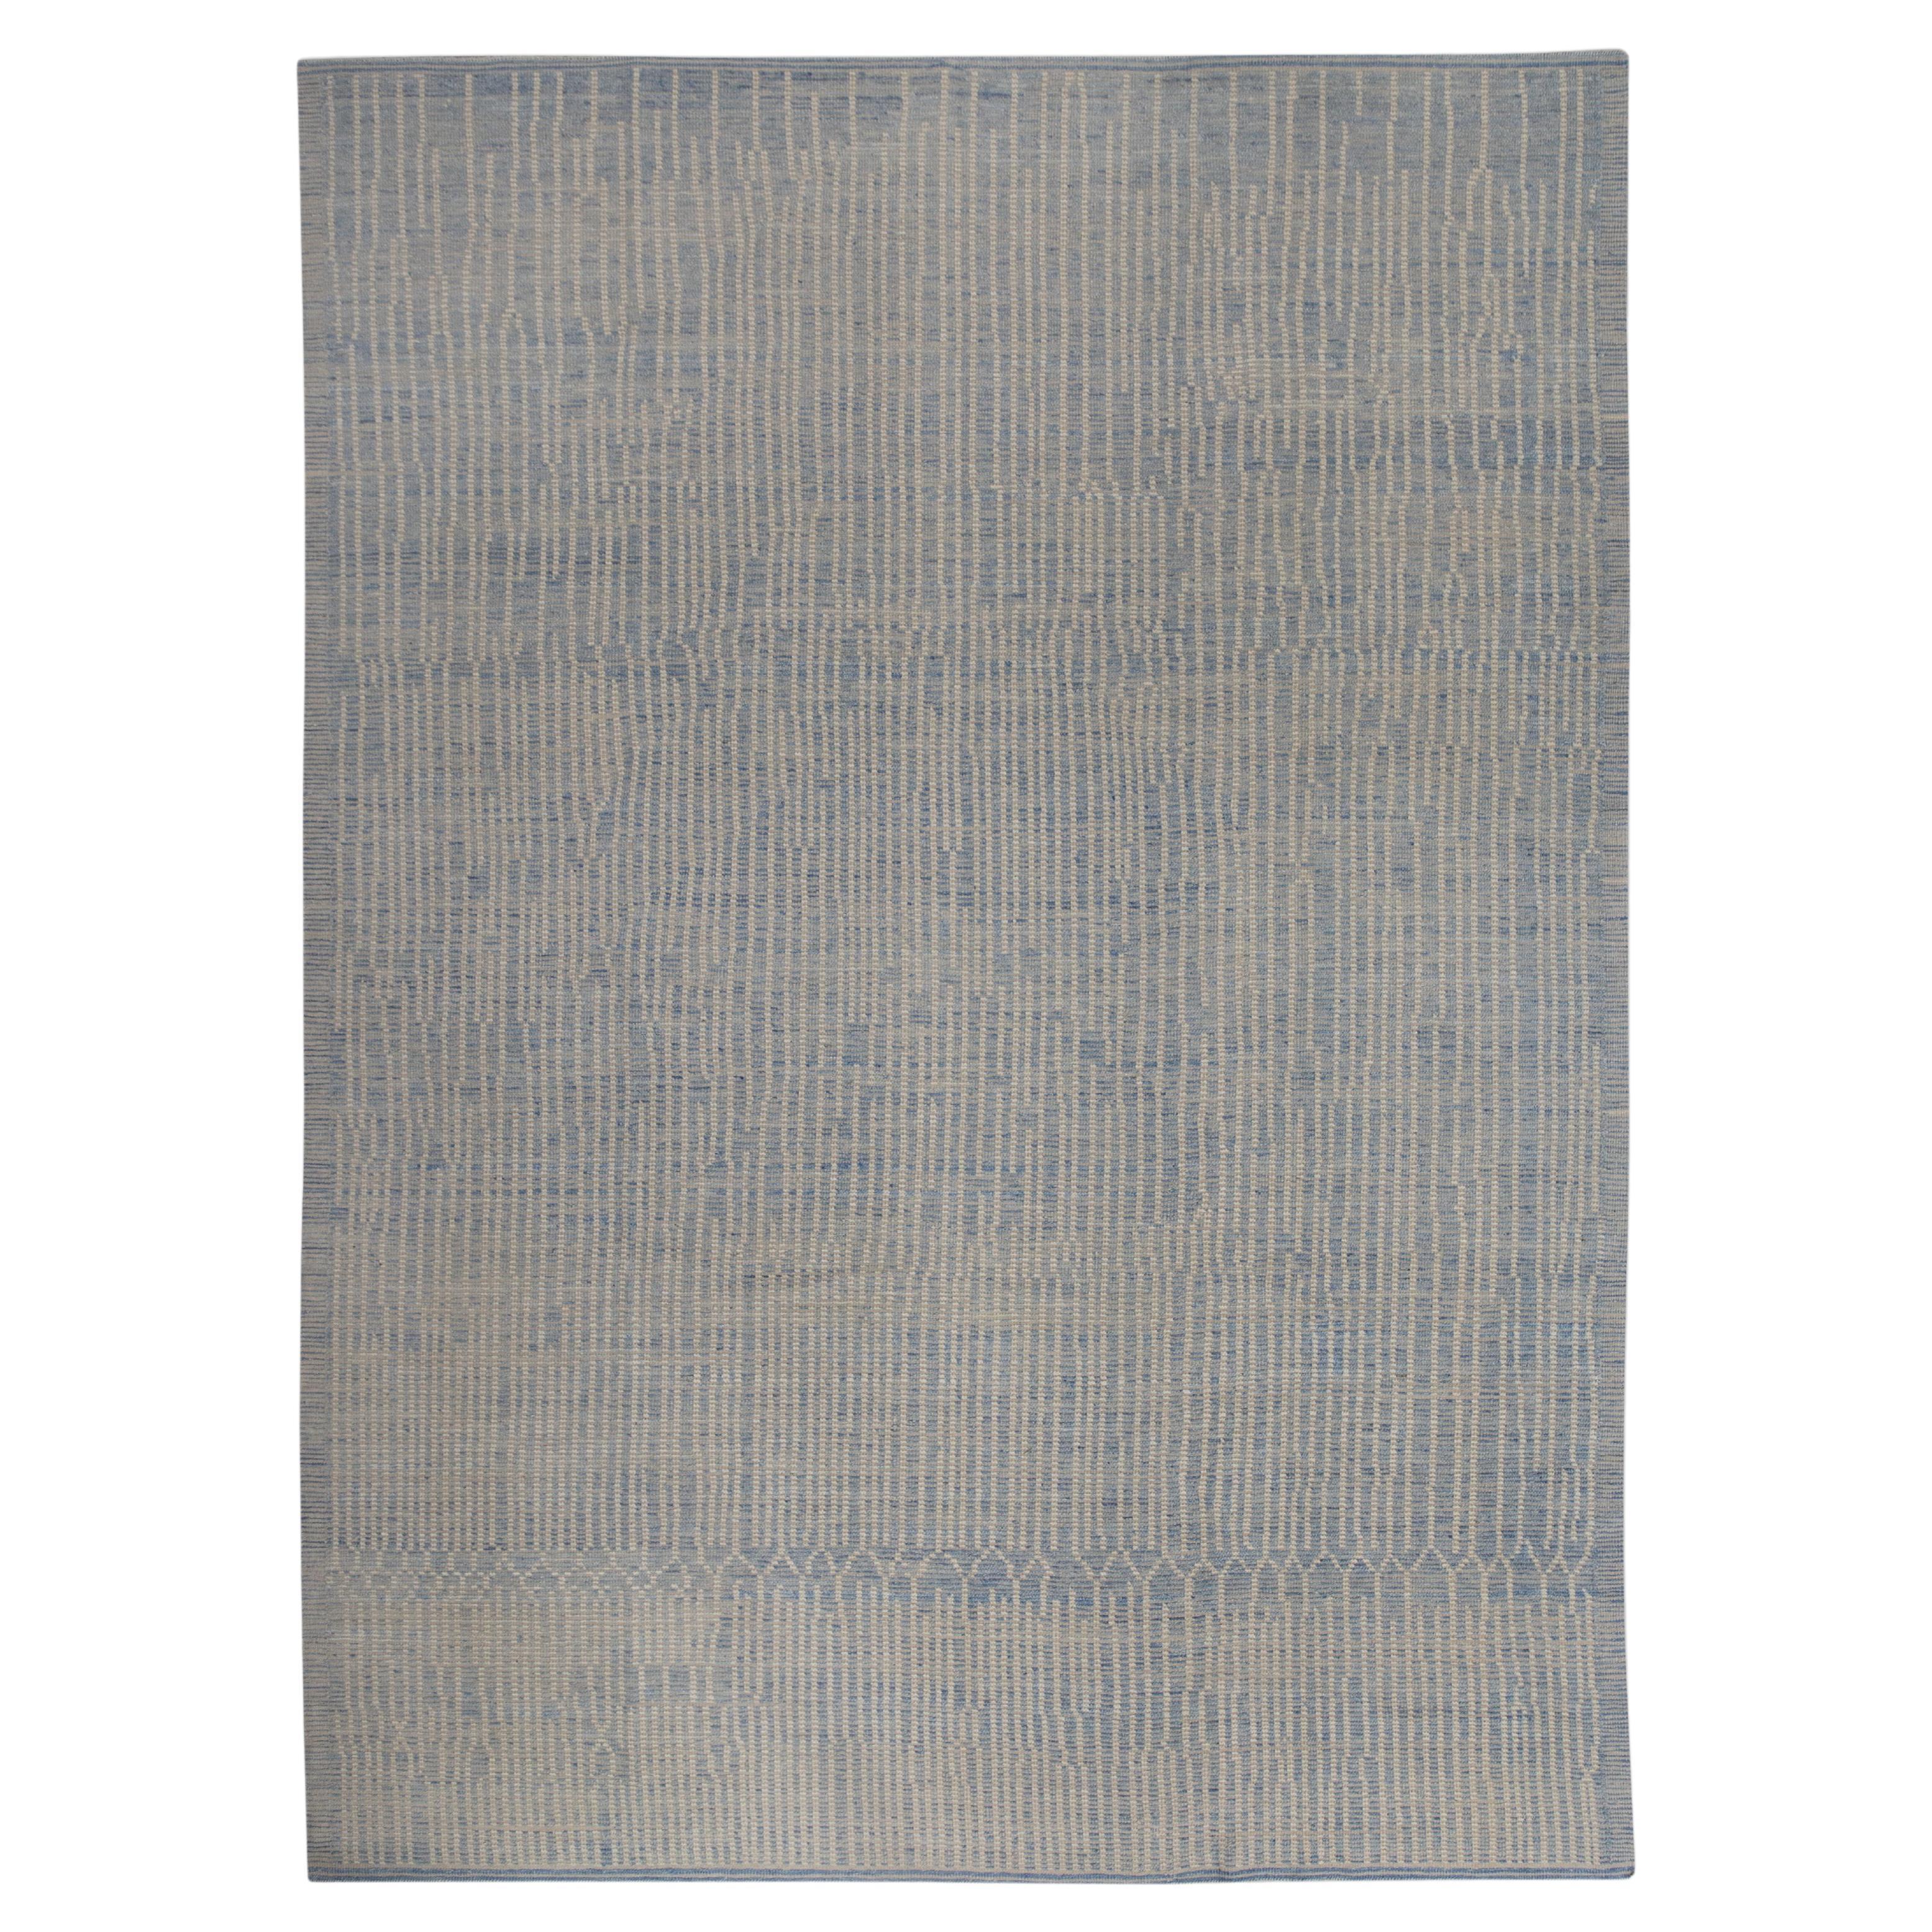  Handmade Wool Tulu Rug in Geometric Design 10' x 13'10" For Sale